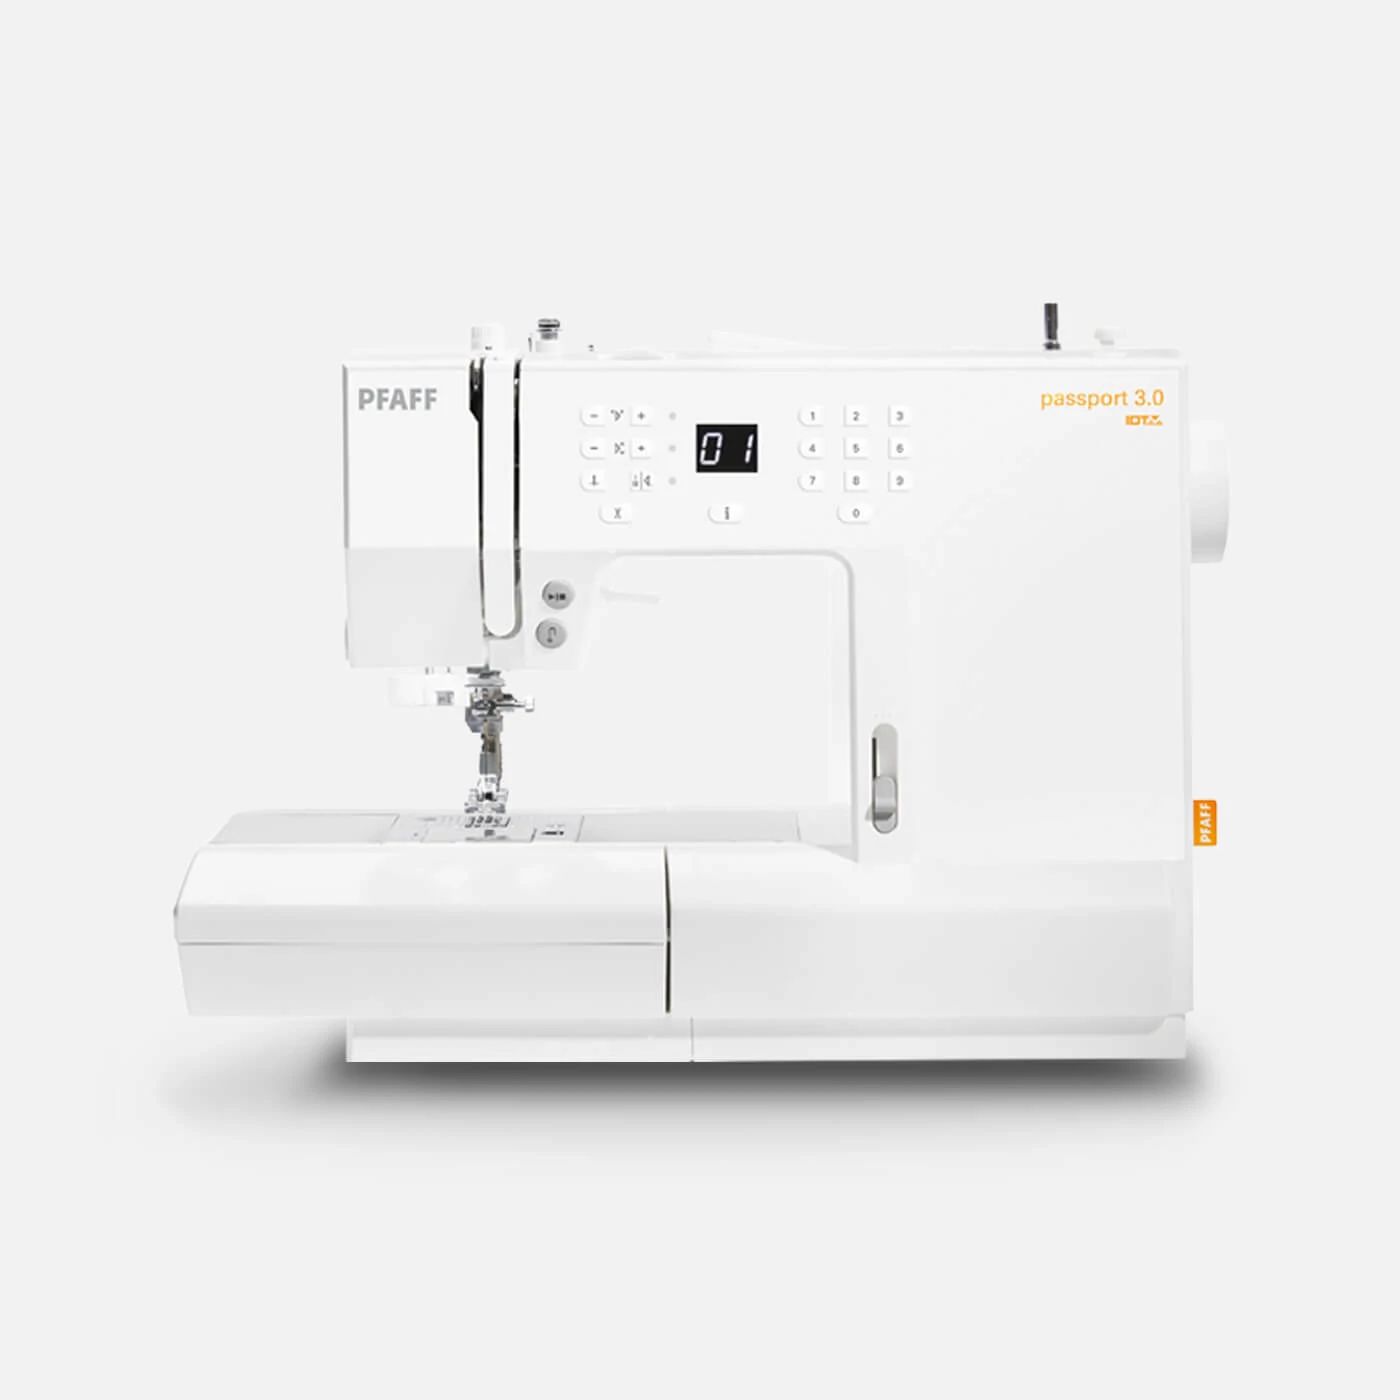 passport™ 3.0 Sewing Machine image